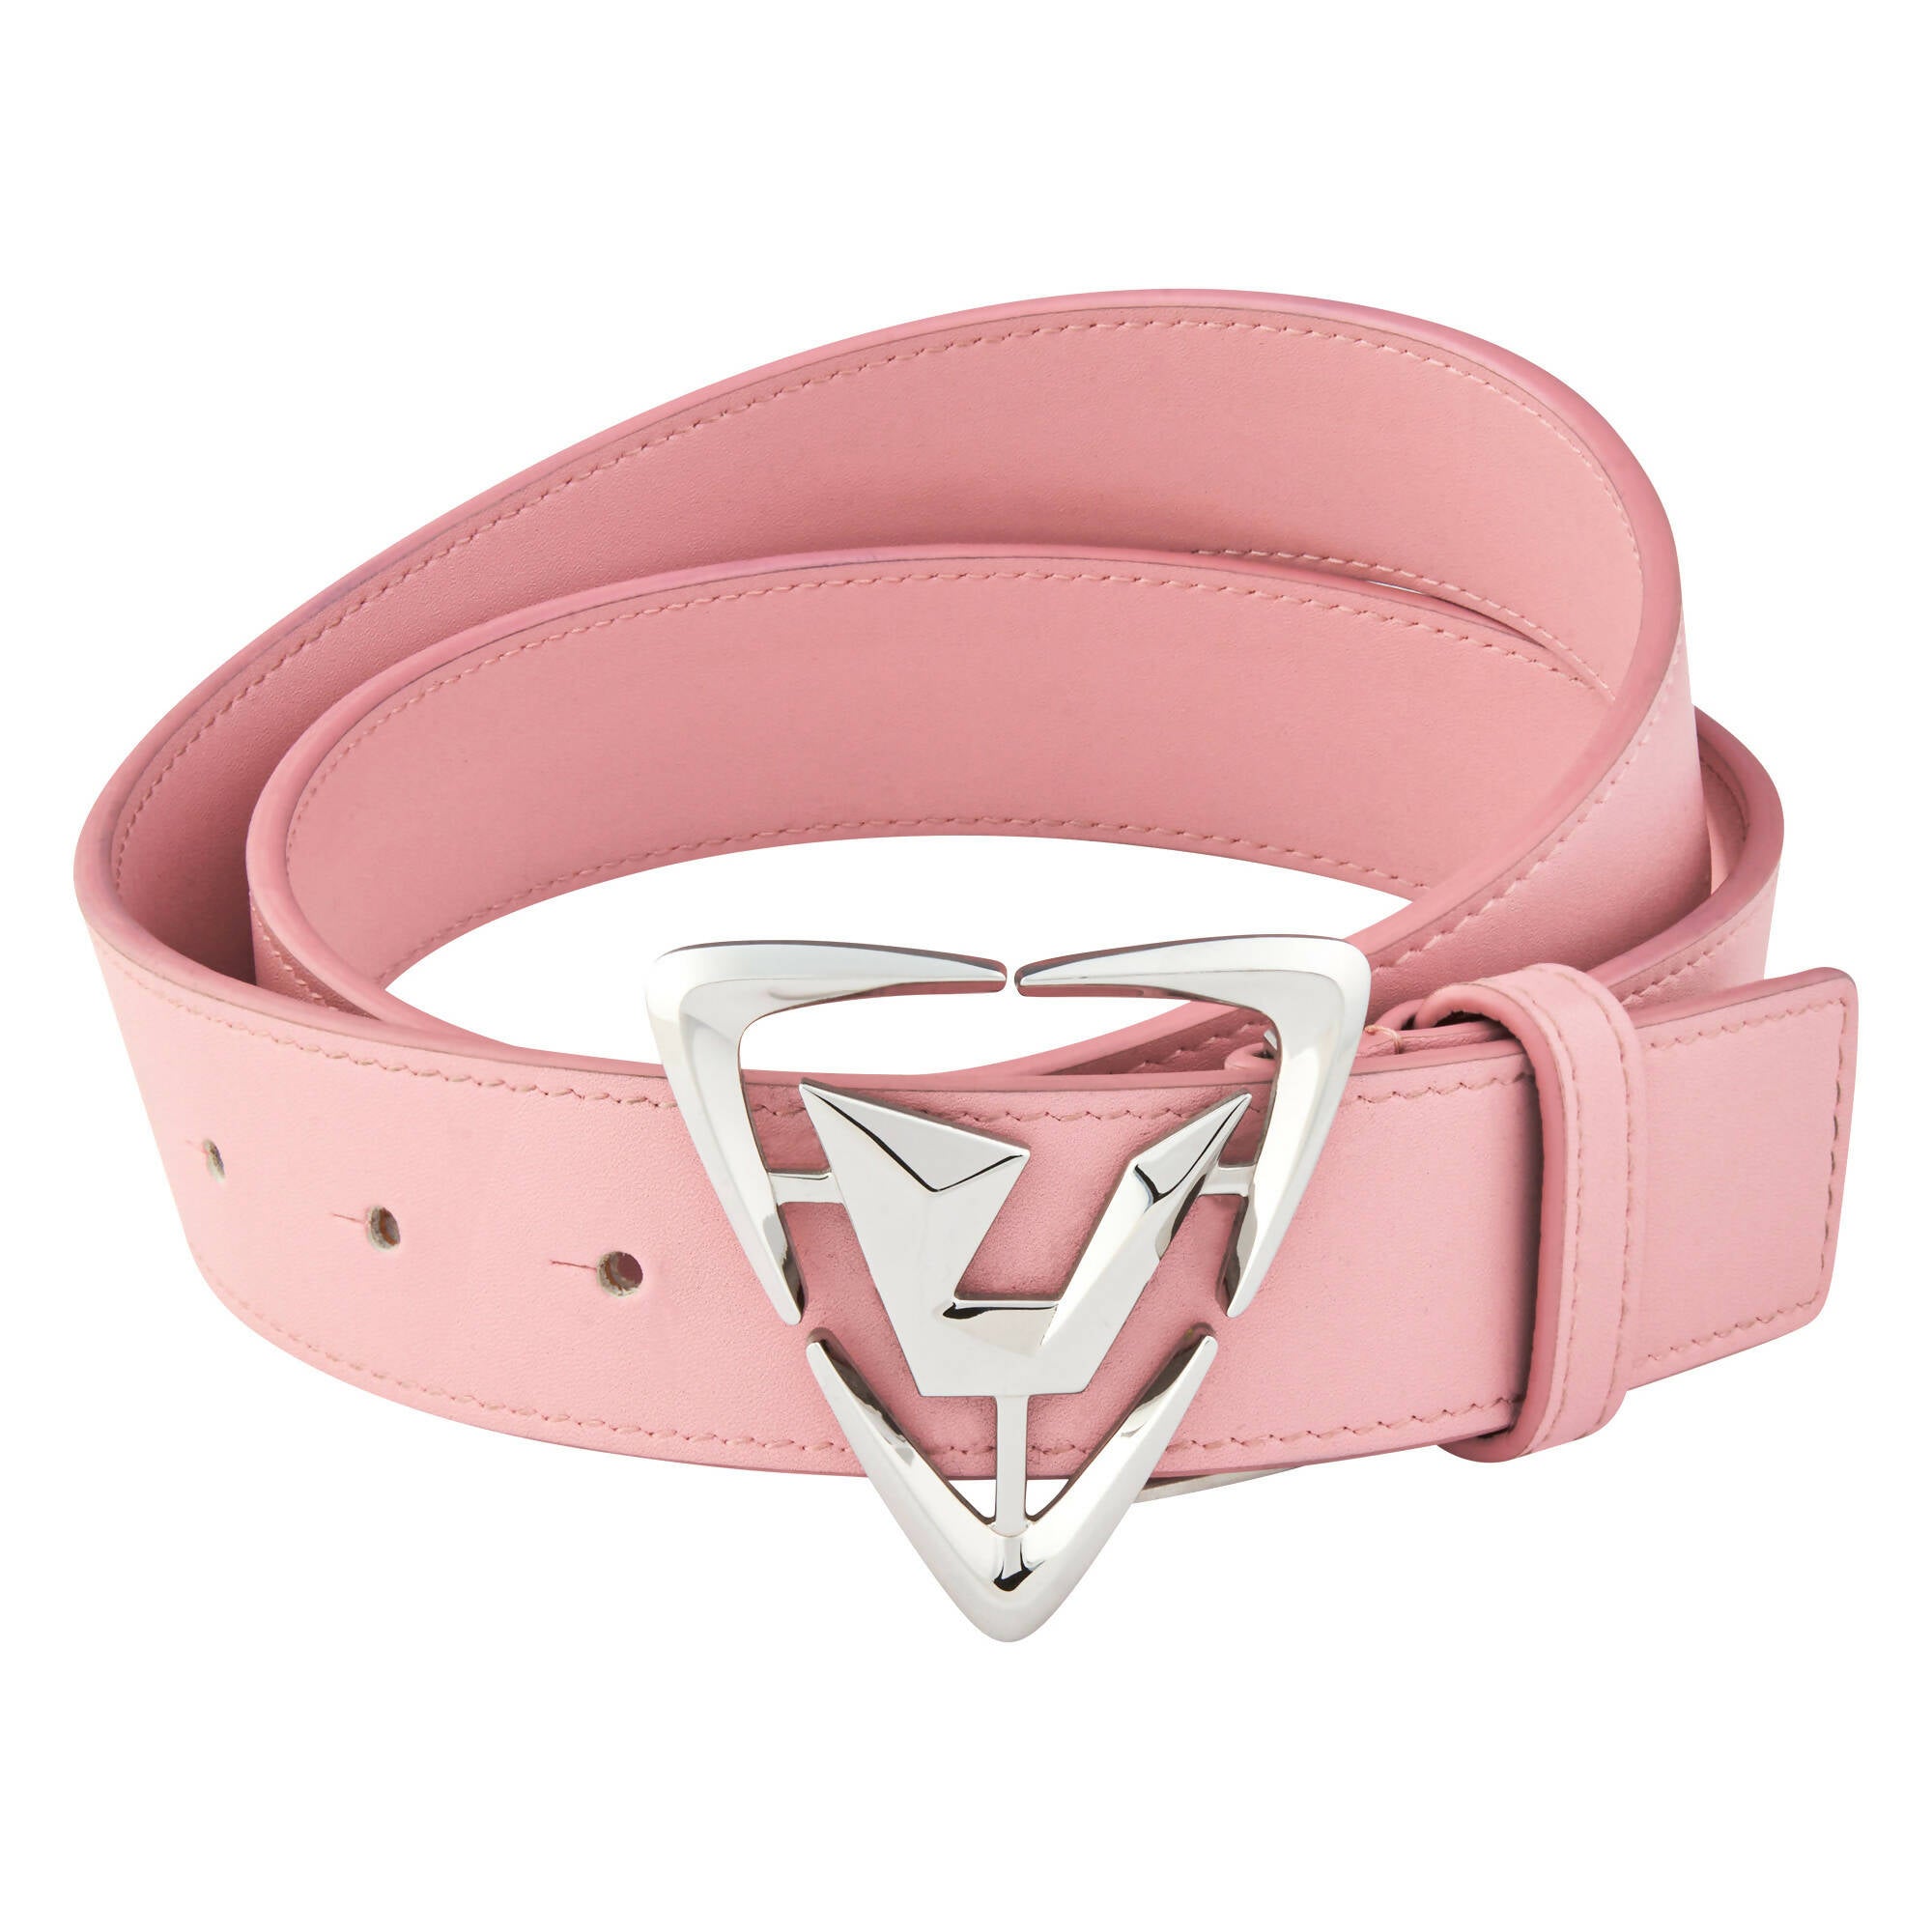 Unlaced Pink Belt